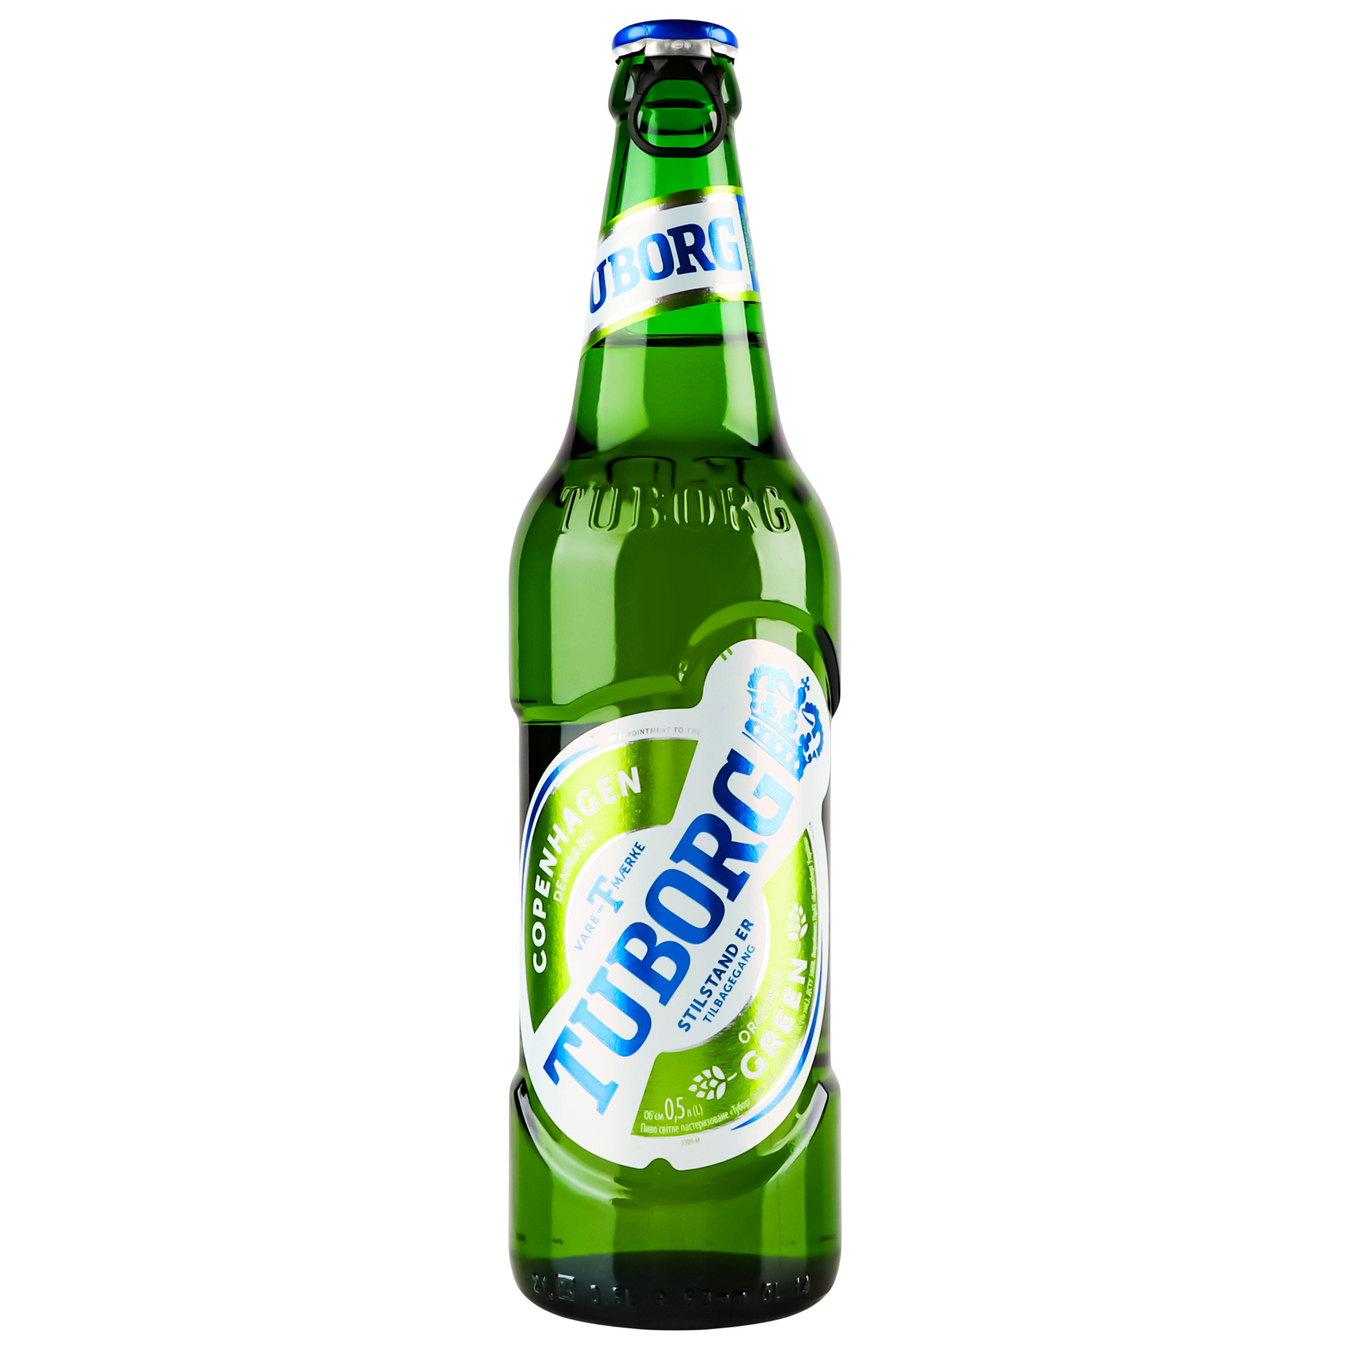 Tuborg Green Light Pasteurized Beer 4,6% 0,5l